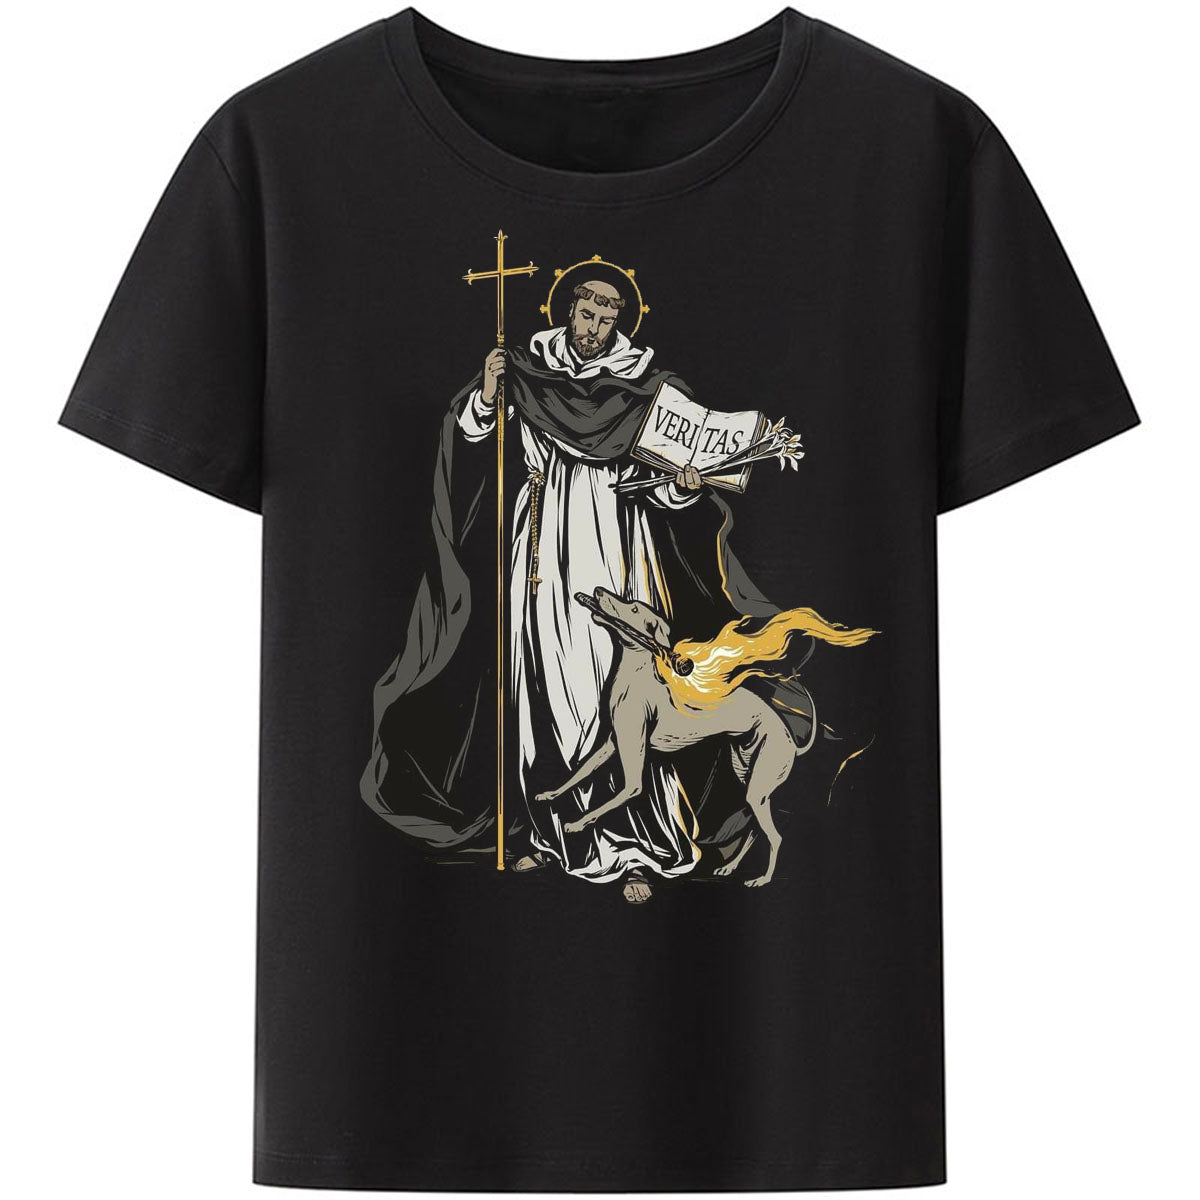 Christianartbag Funny T-Shirt, Christian Art Shirt, Christian humor, Funny religious shirts, Unisex T-shirt. - Christian Art Bag